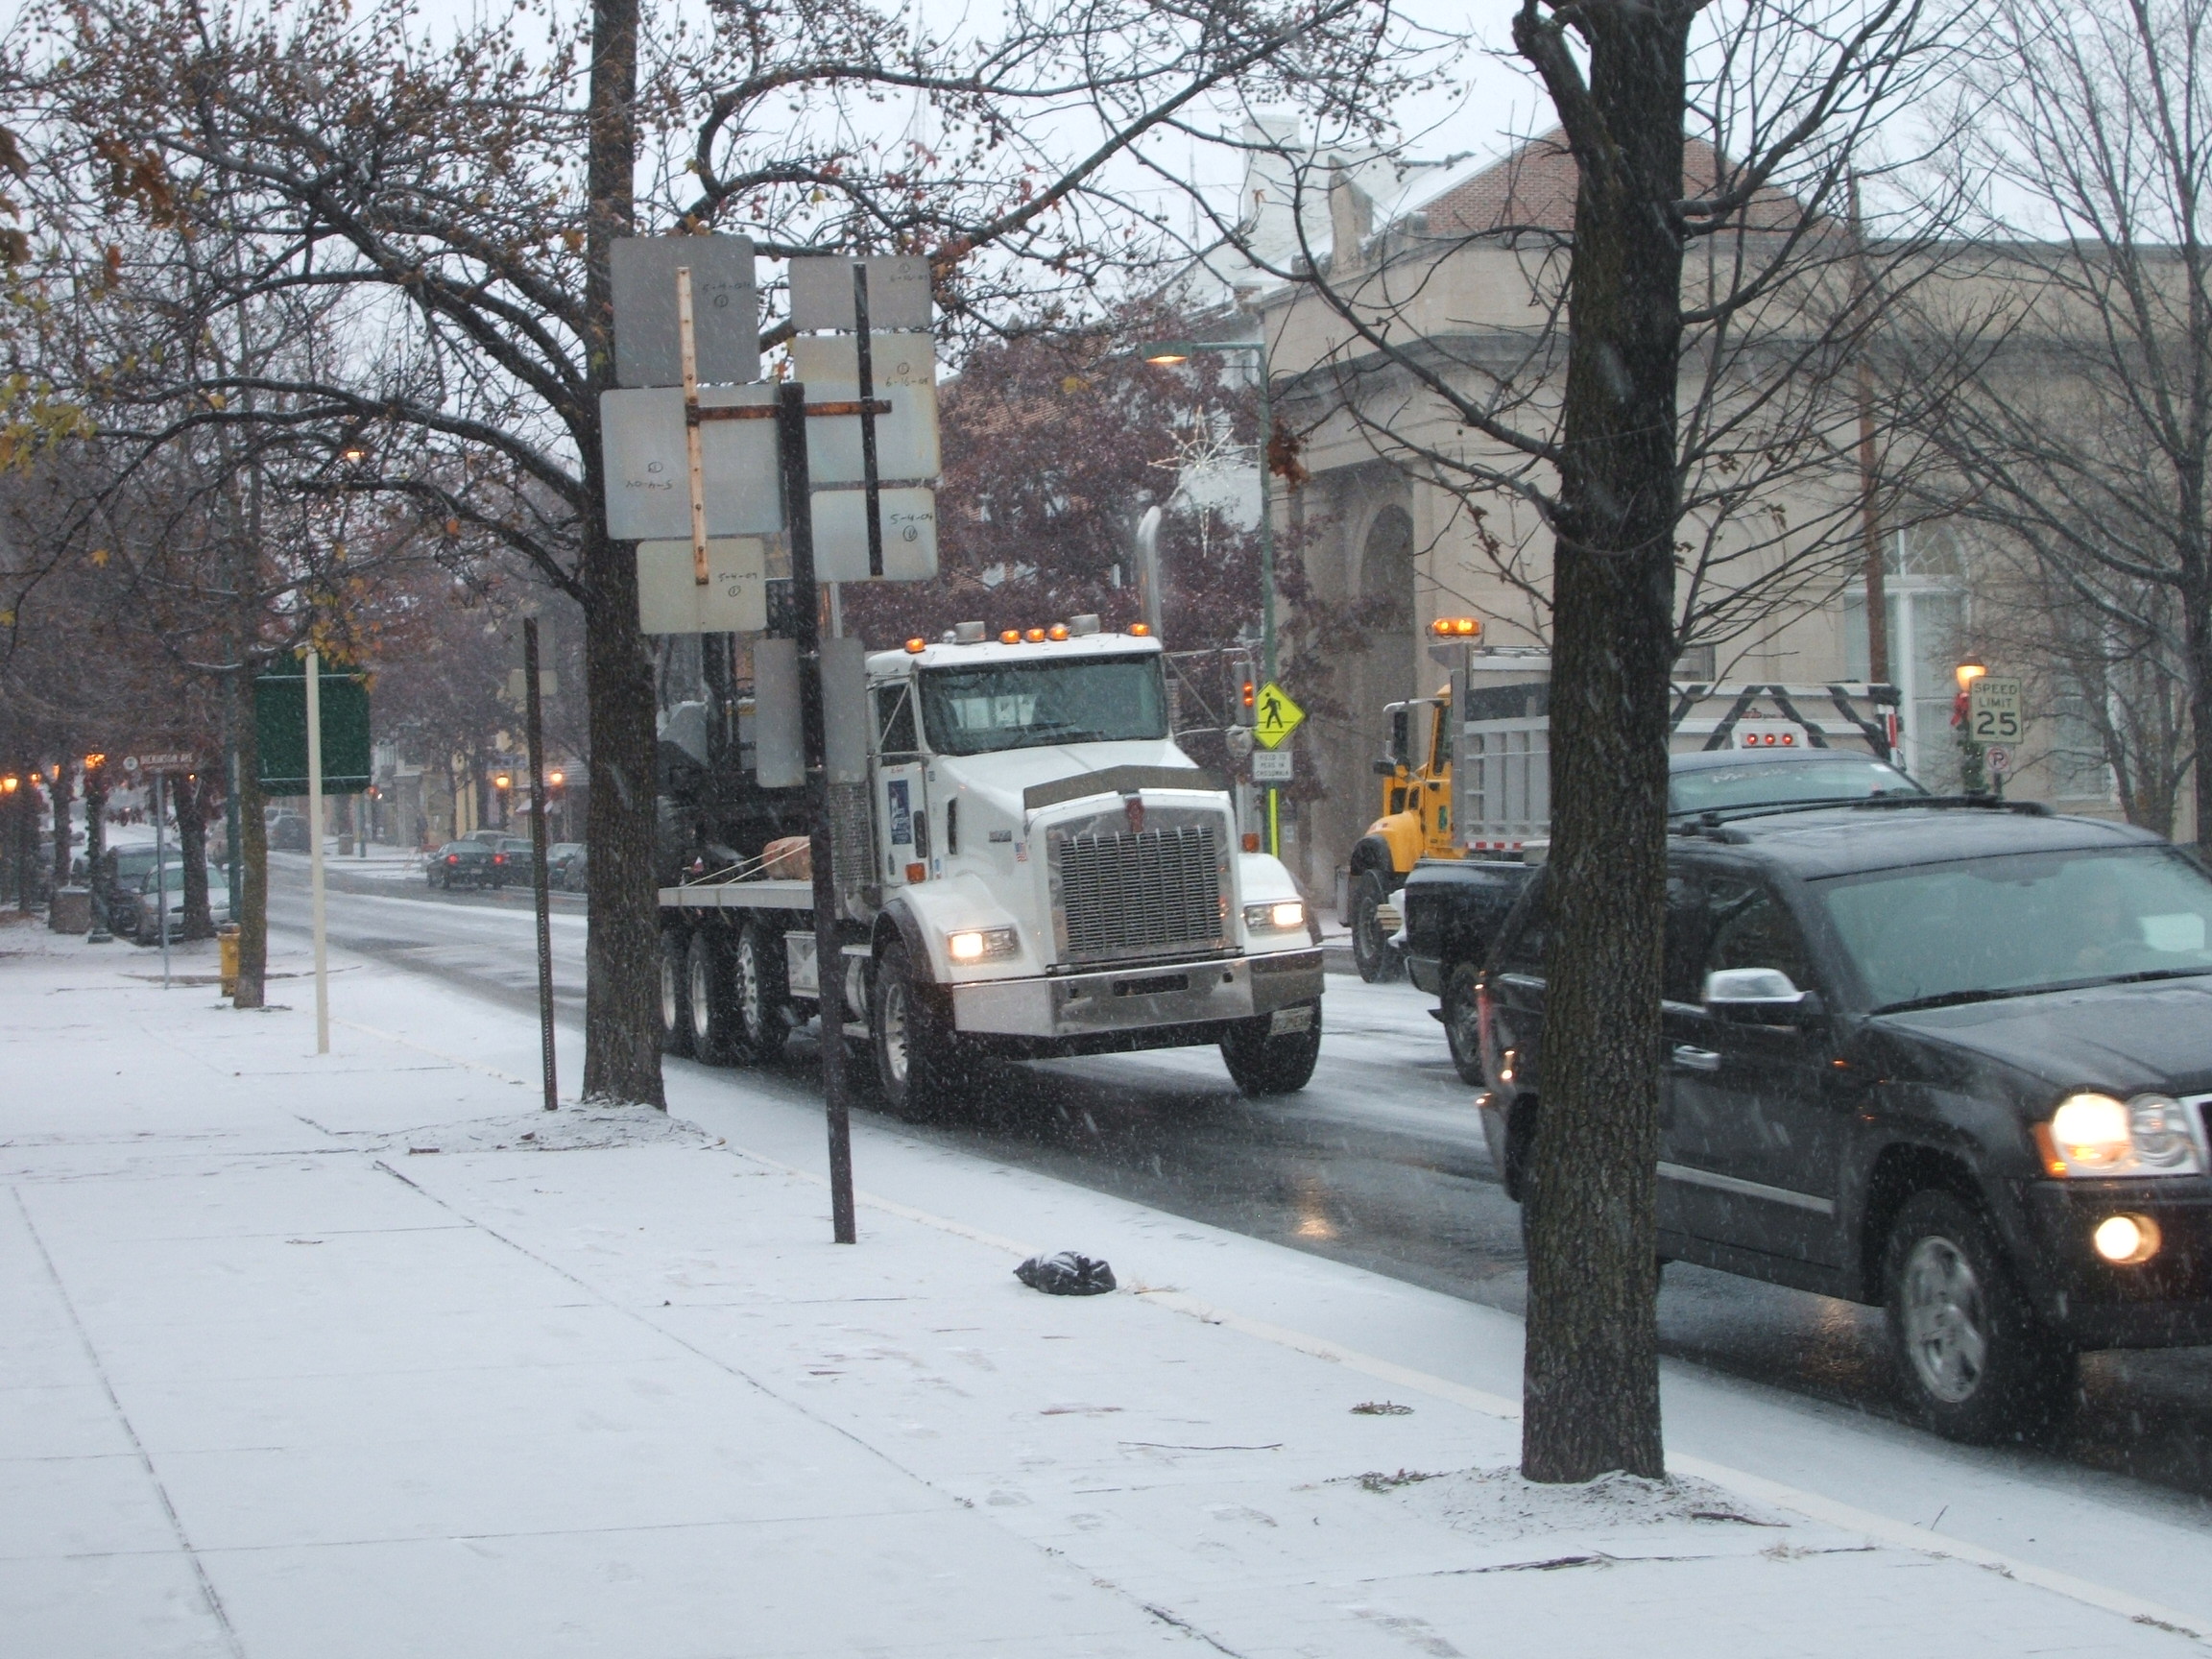 Trucks on Hanover Street, Carlisle, PA. December 5th, 2007. Photograph by Ellen Simon.